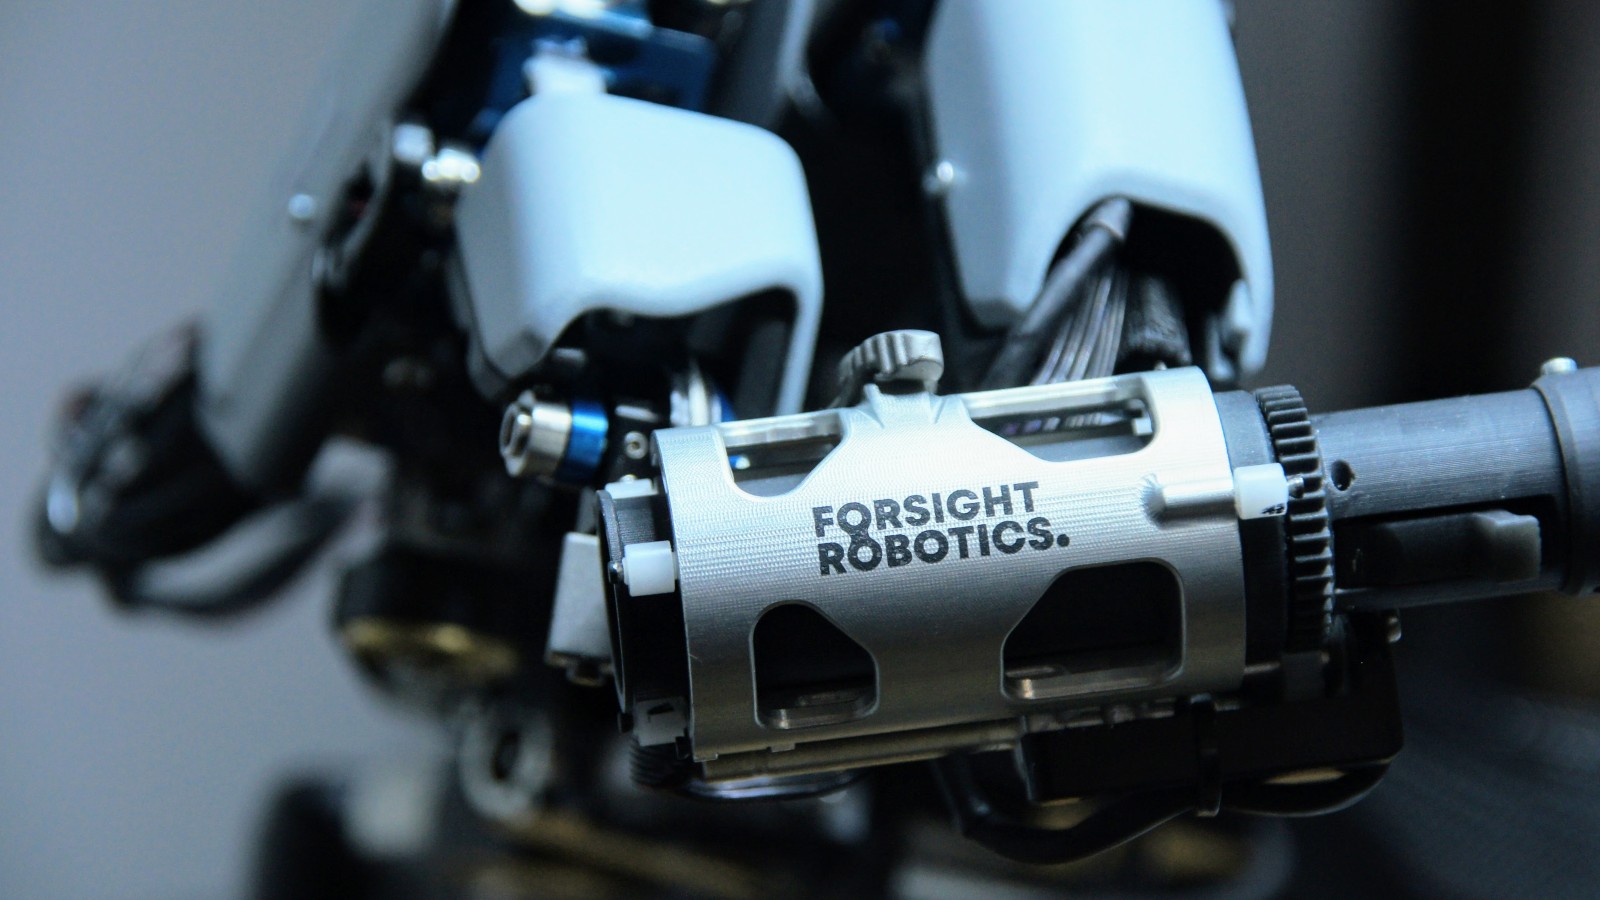 Photo courtesy of ForSight Robotics